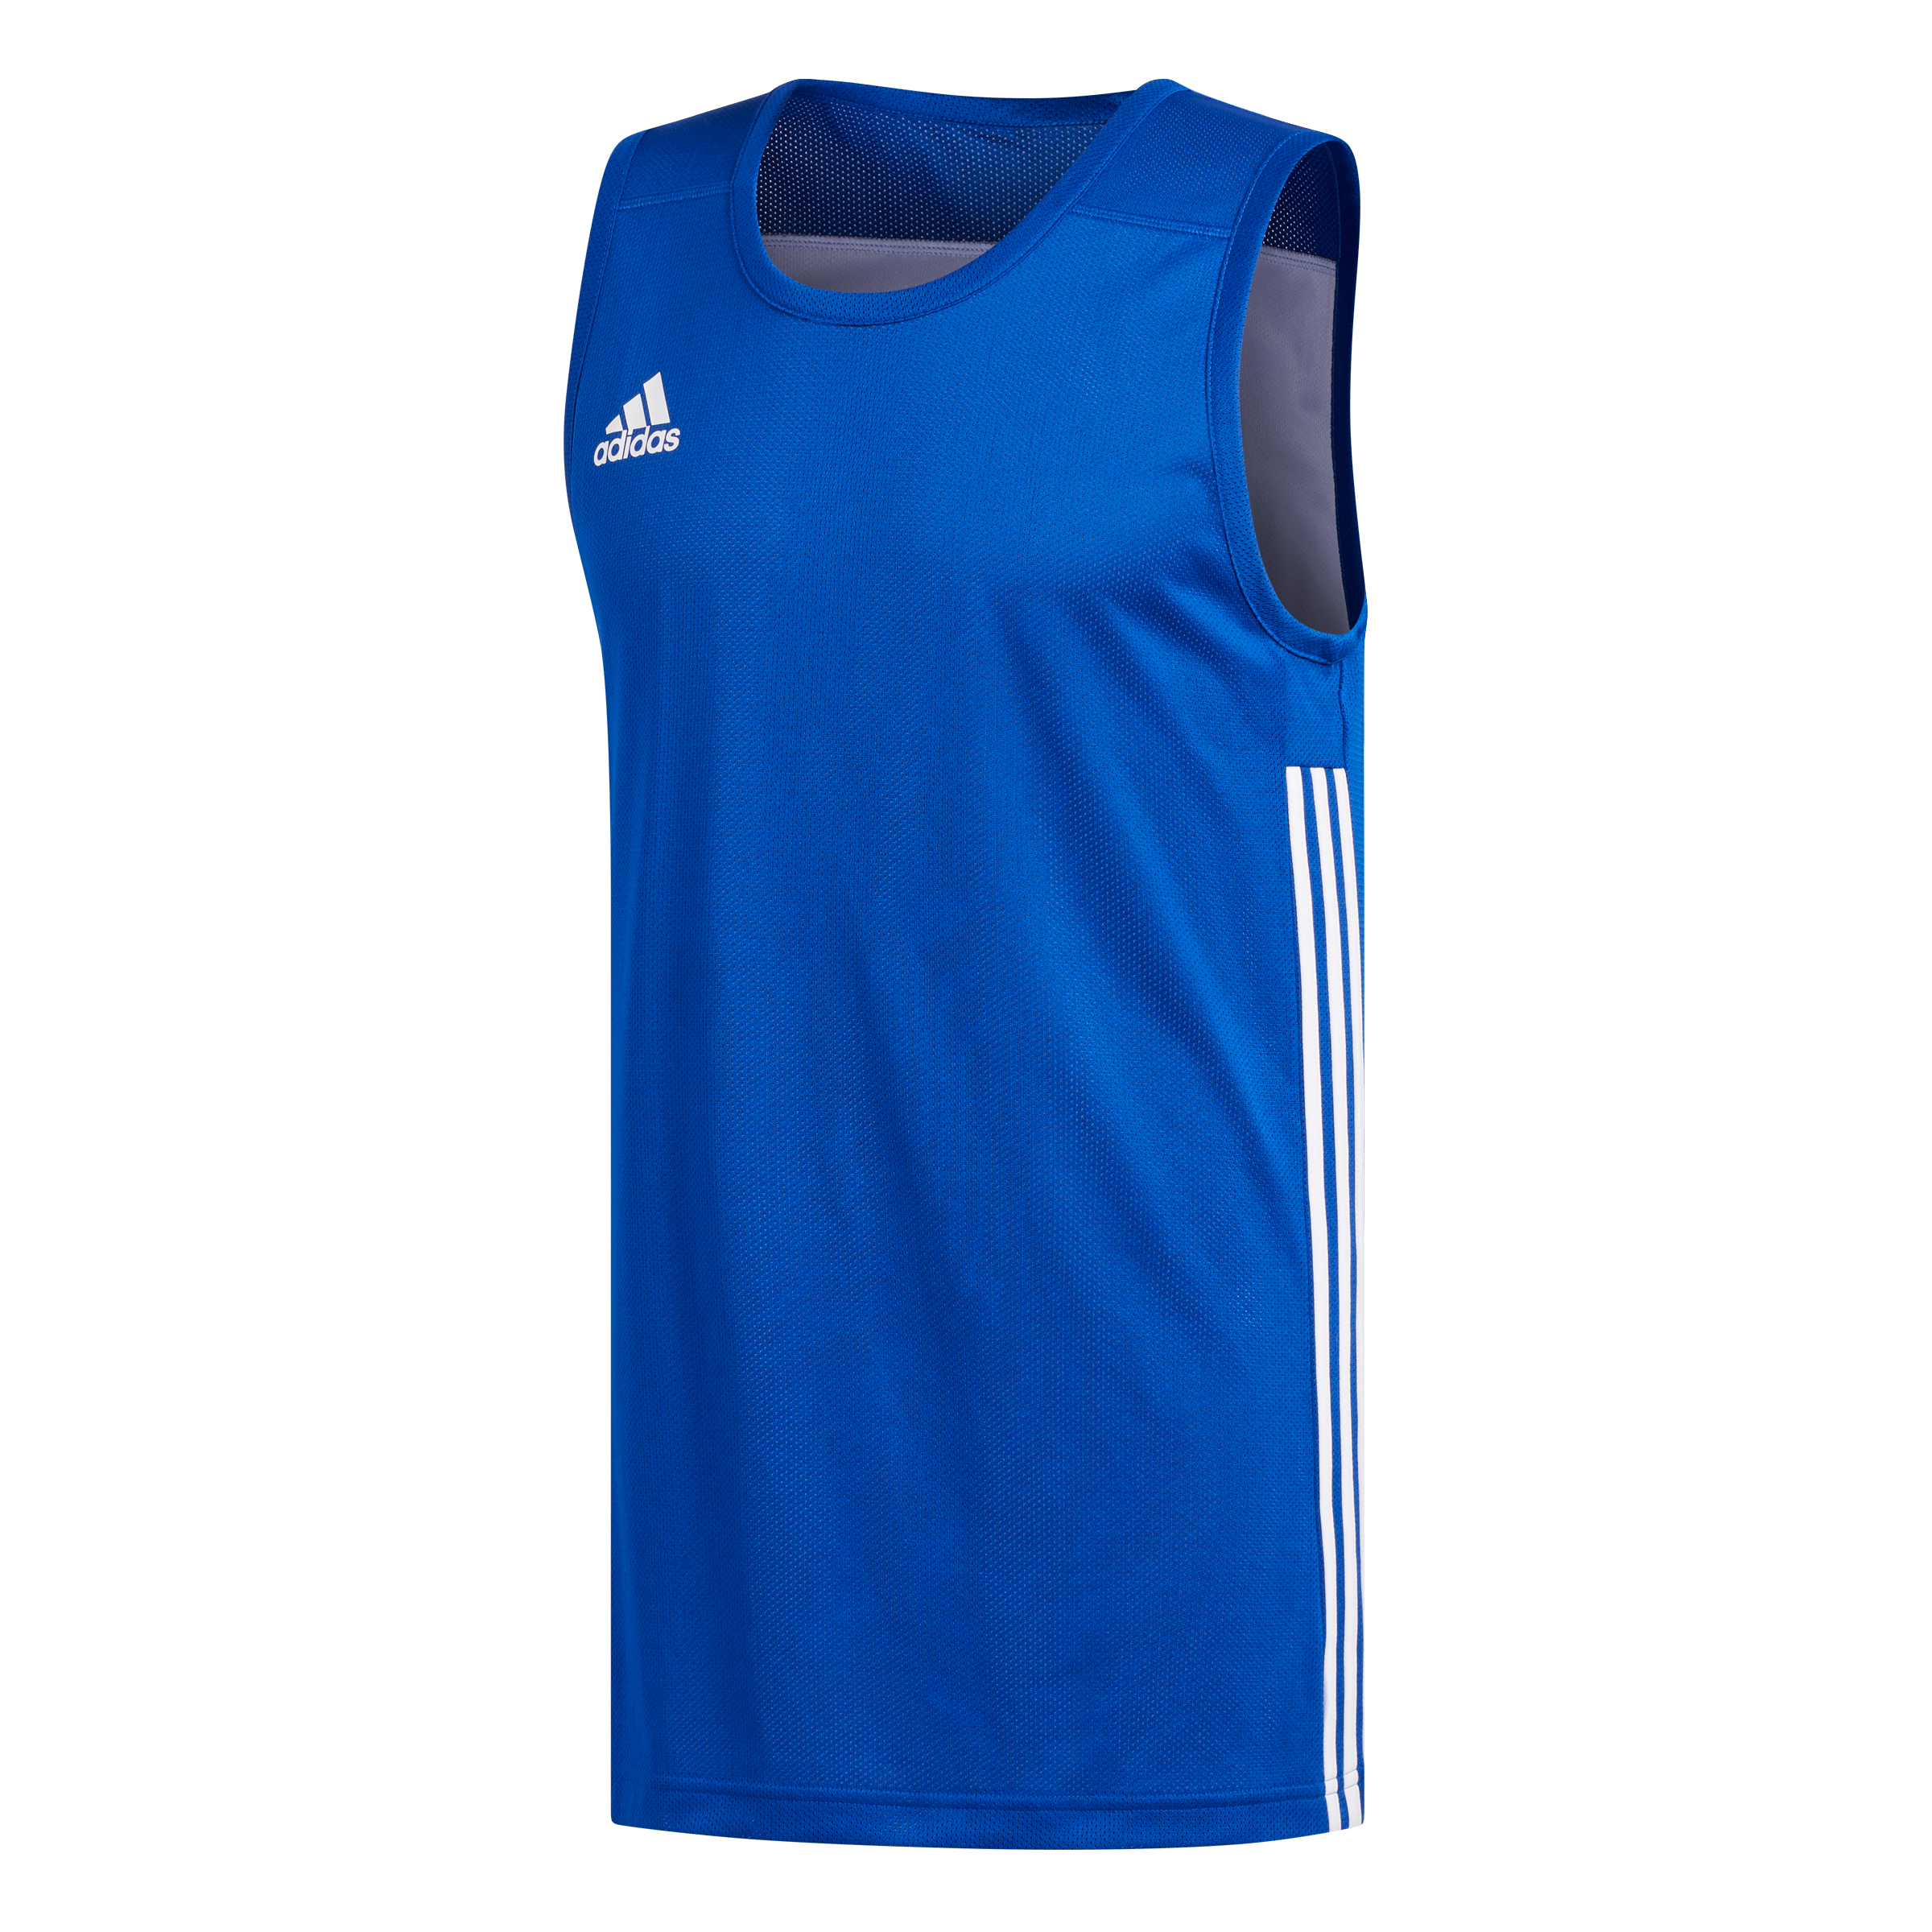 Alley-Oop Basketball Uniform - Reversible Jersey & Shorts